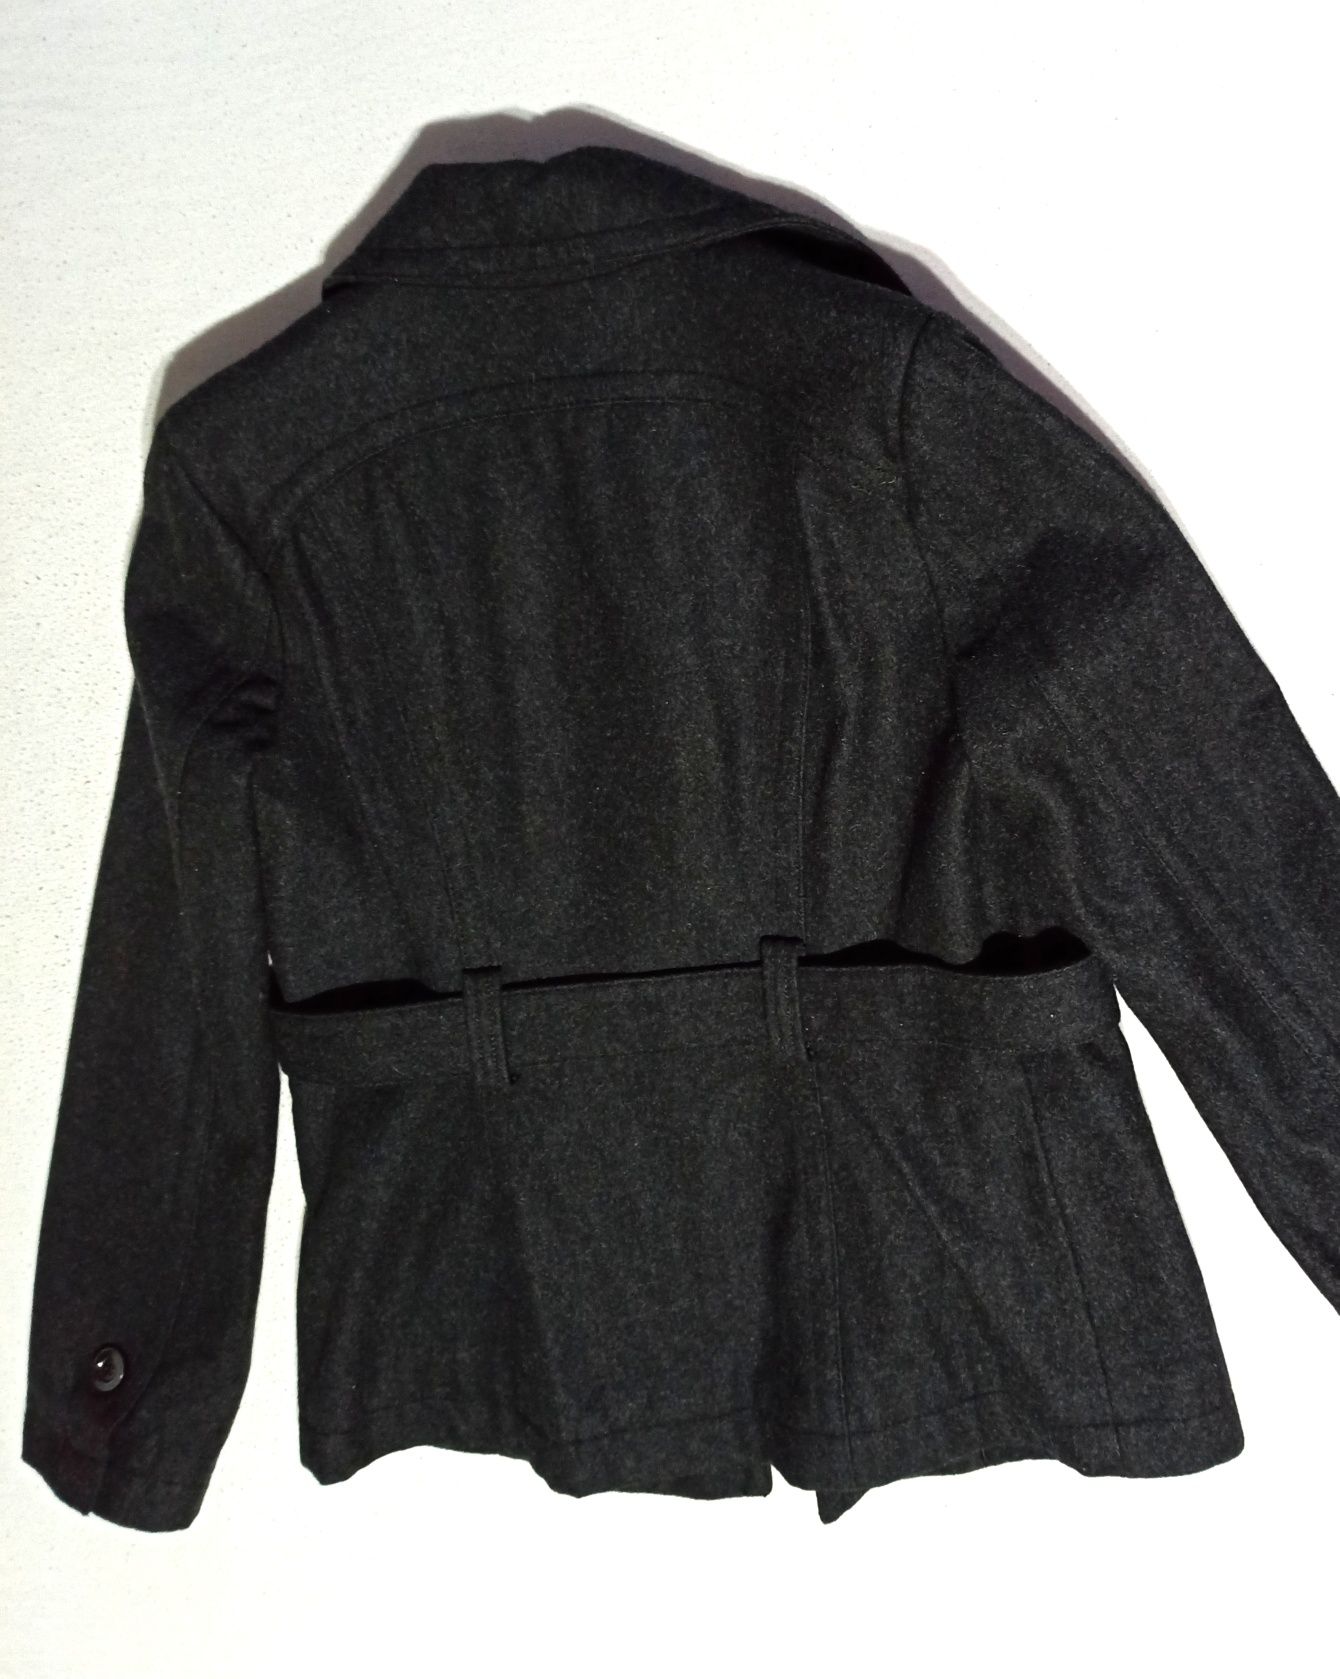 Palton negru Orsay marimea 36